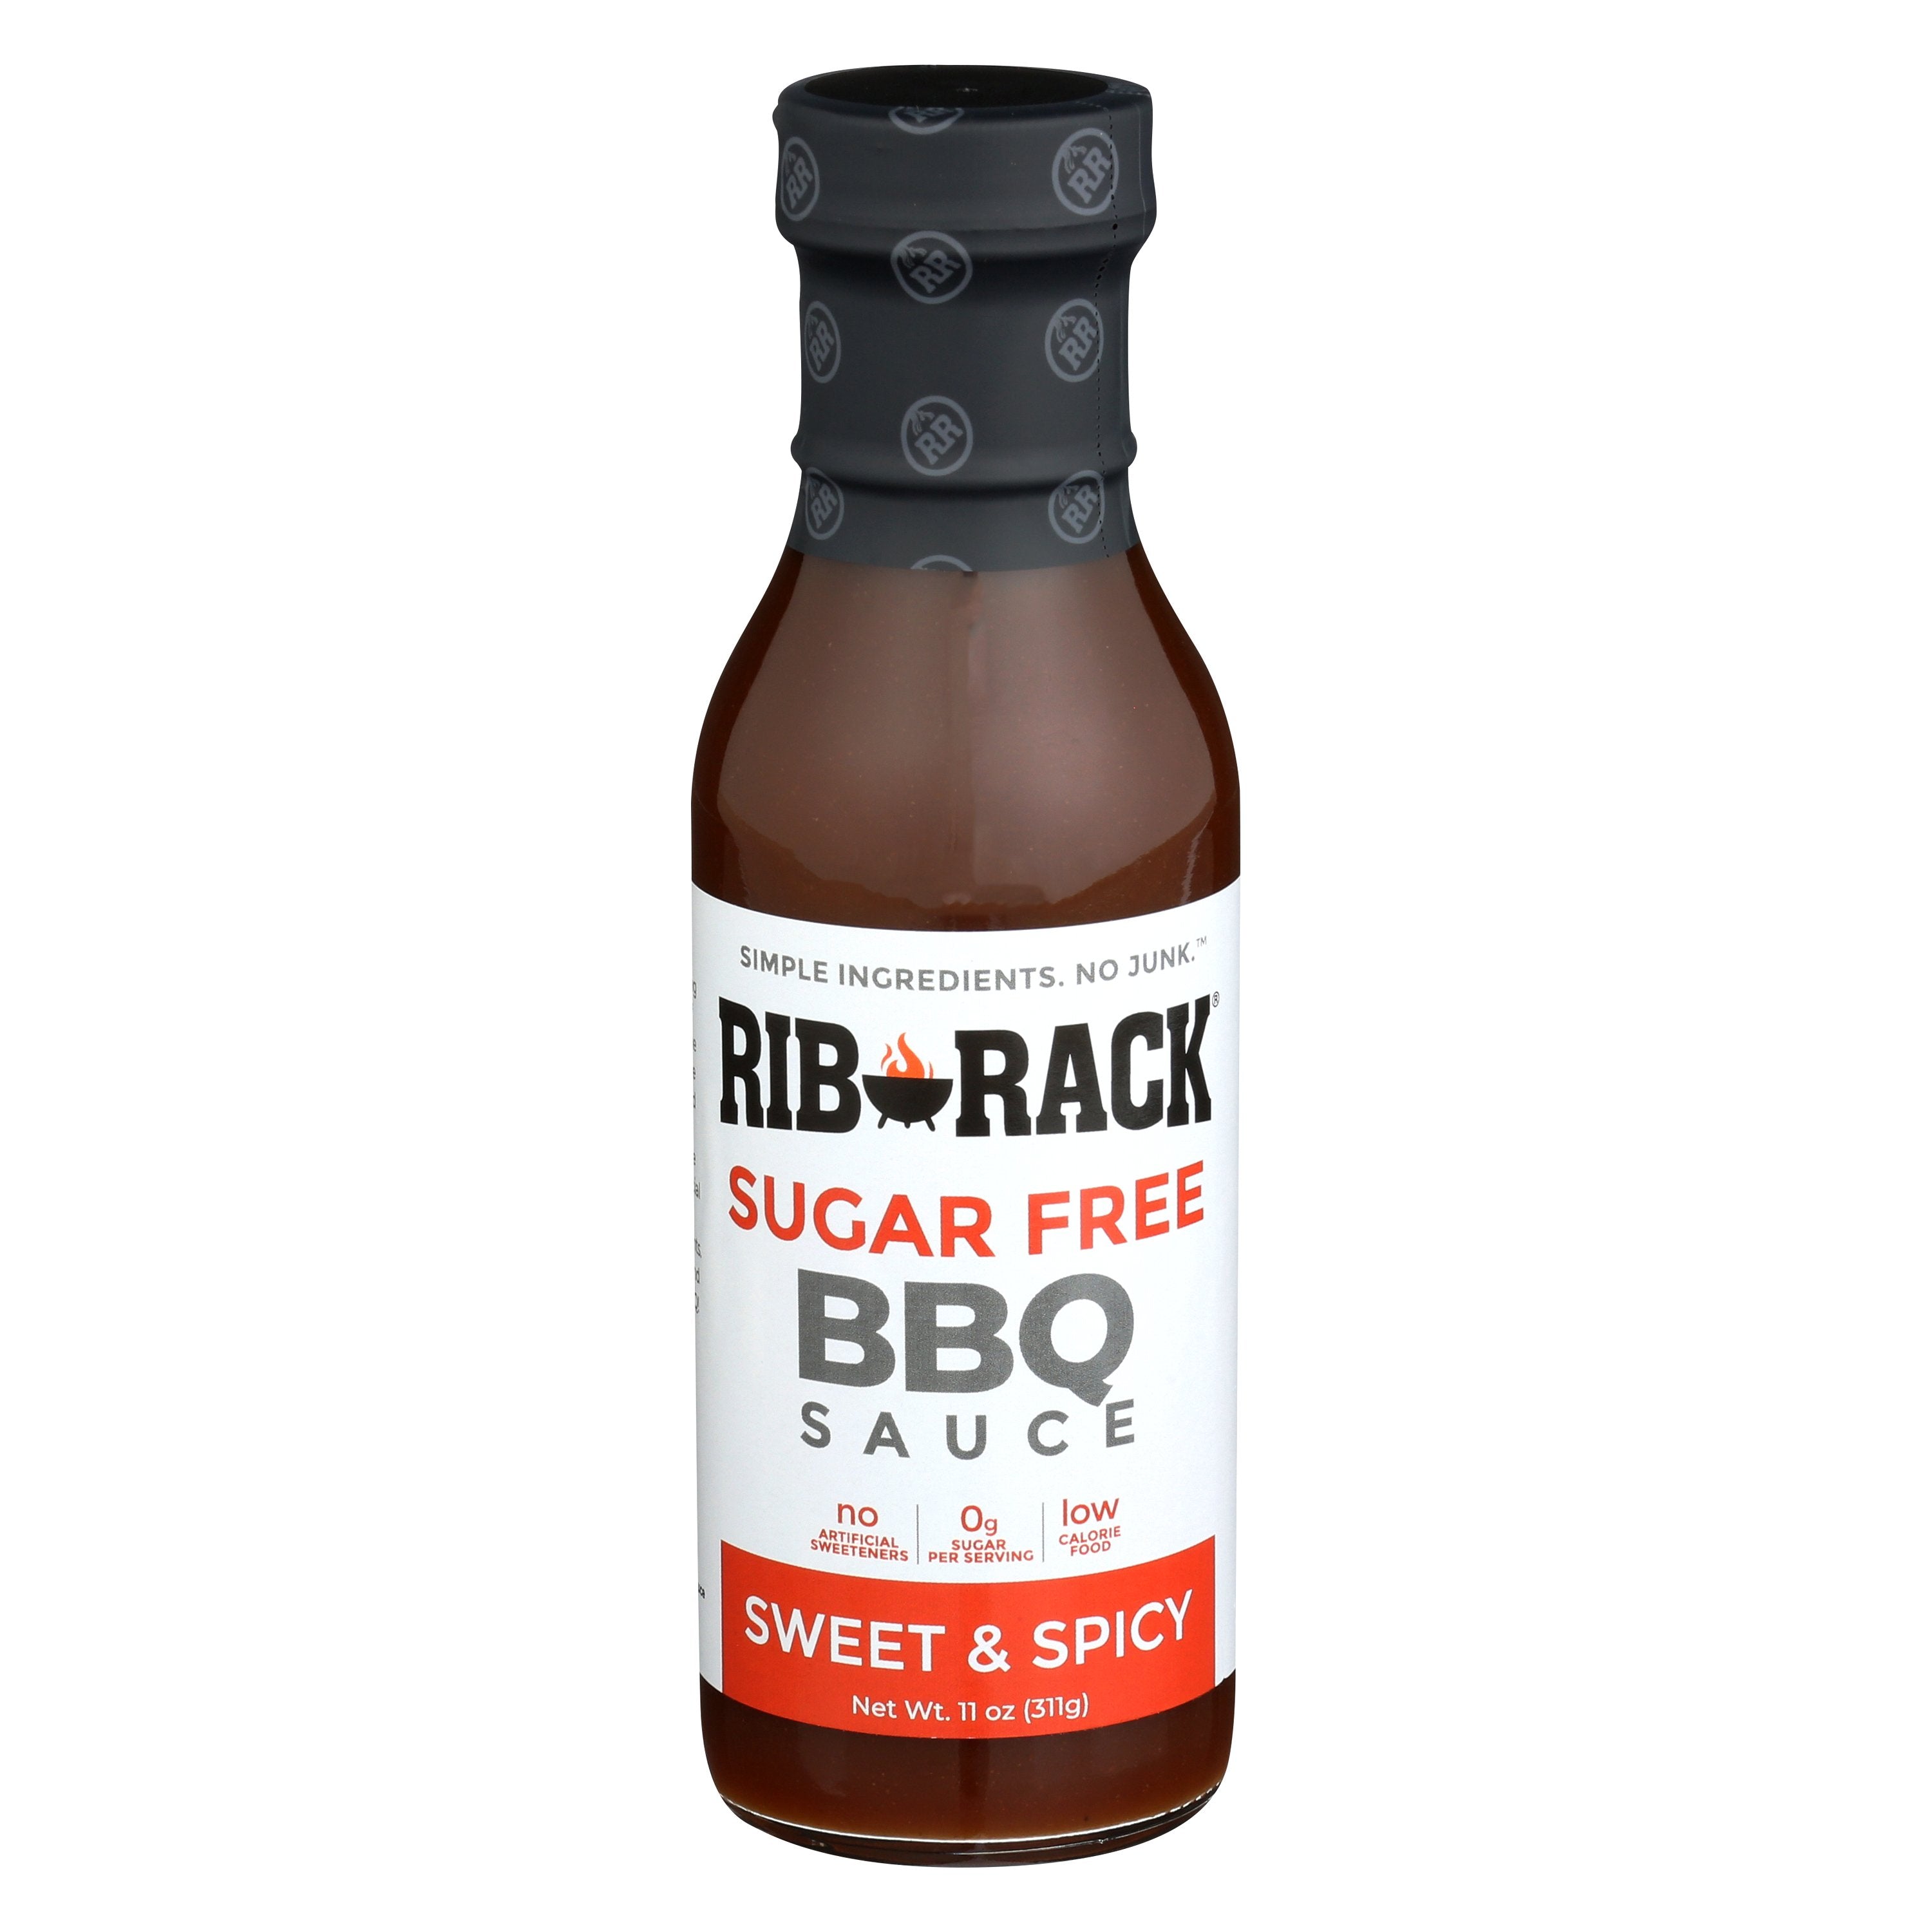 RIB RACK SAUCE BBQ SWEET SPICY SF - Case of 6